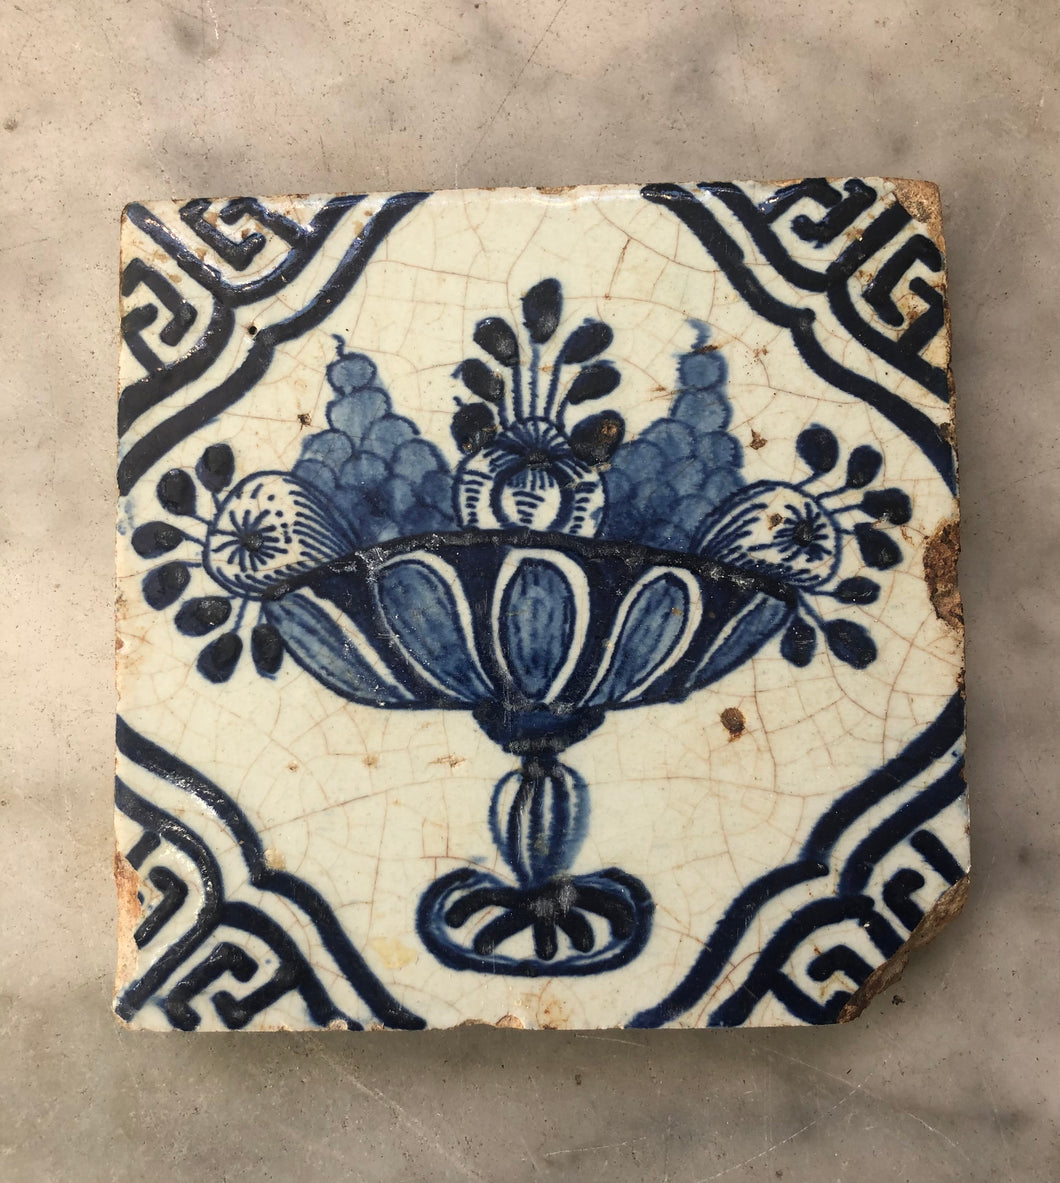 Flowerbasket tile 17th century